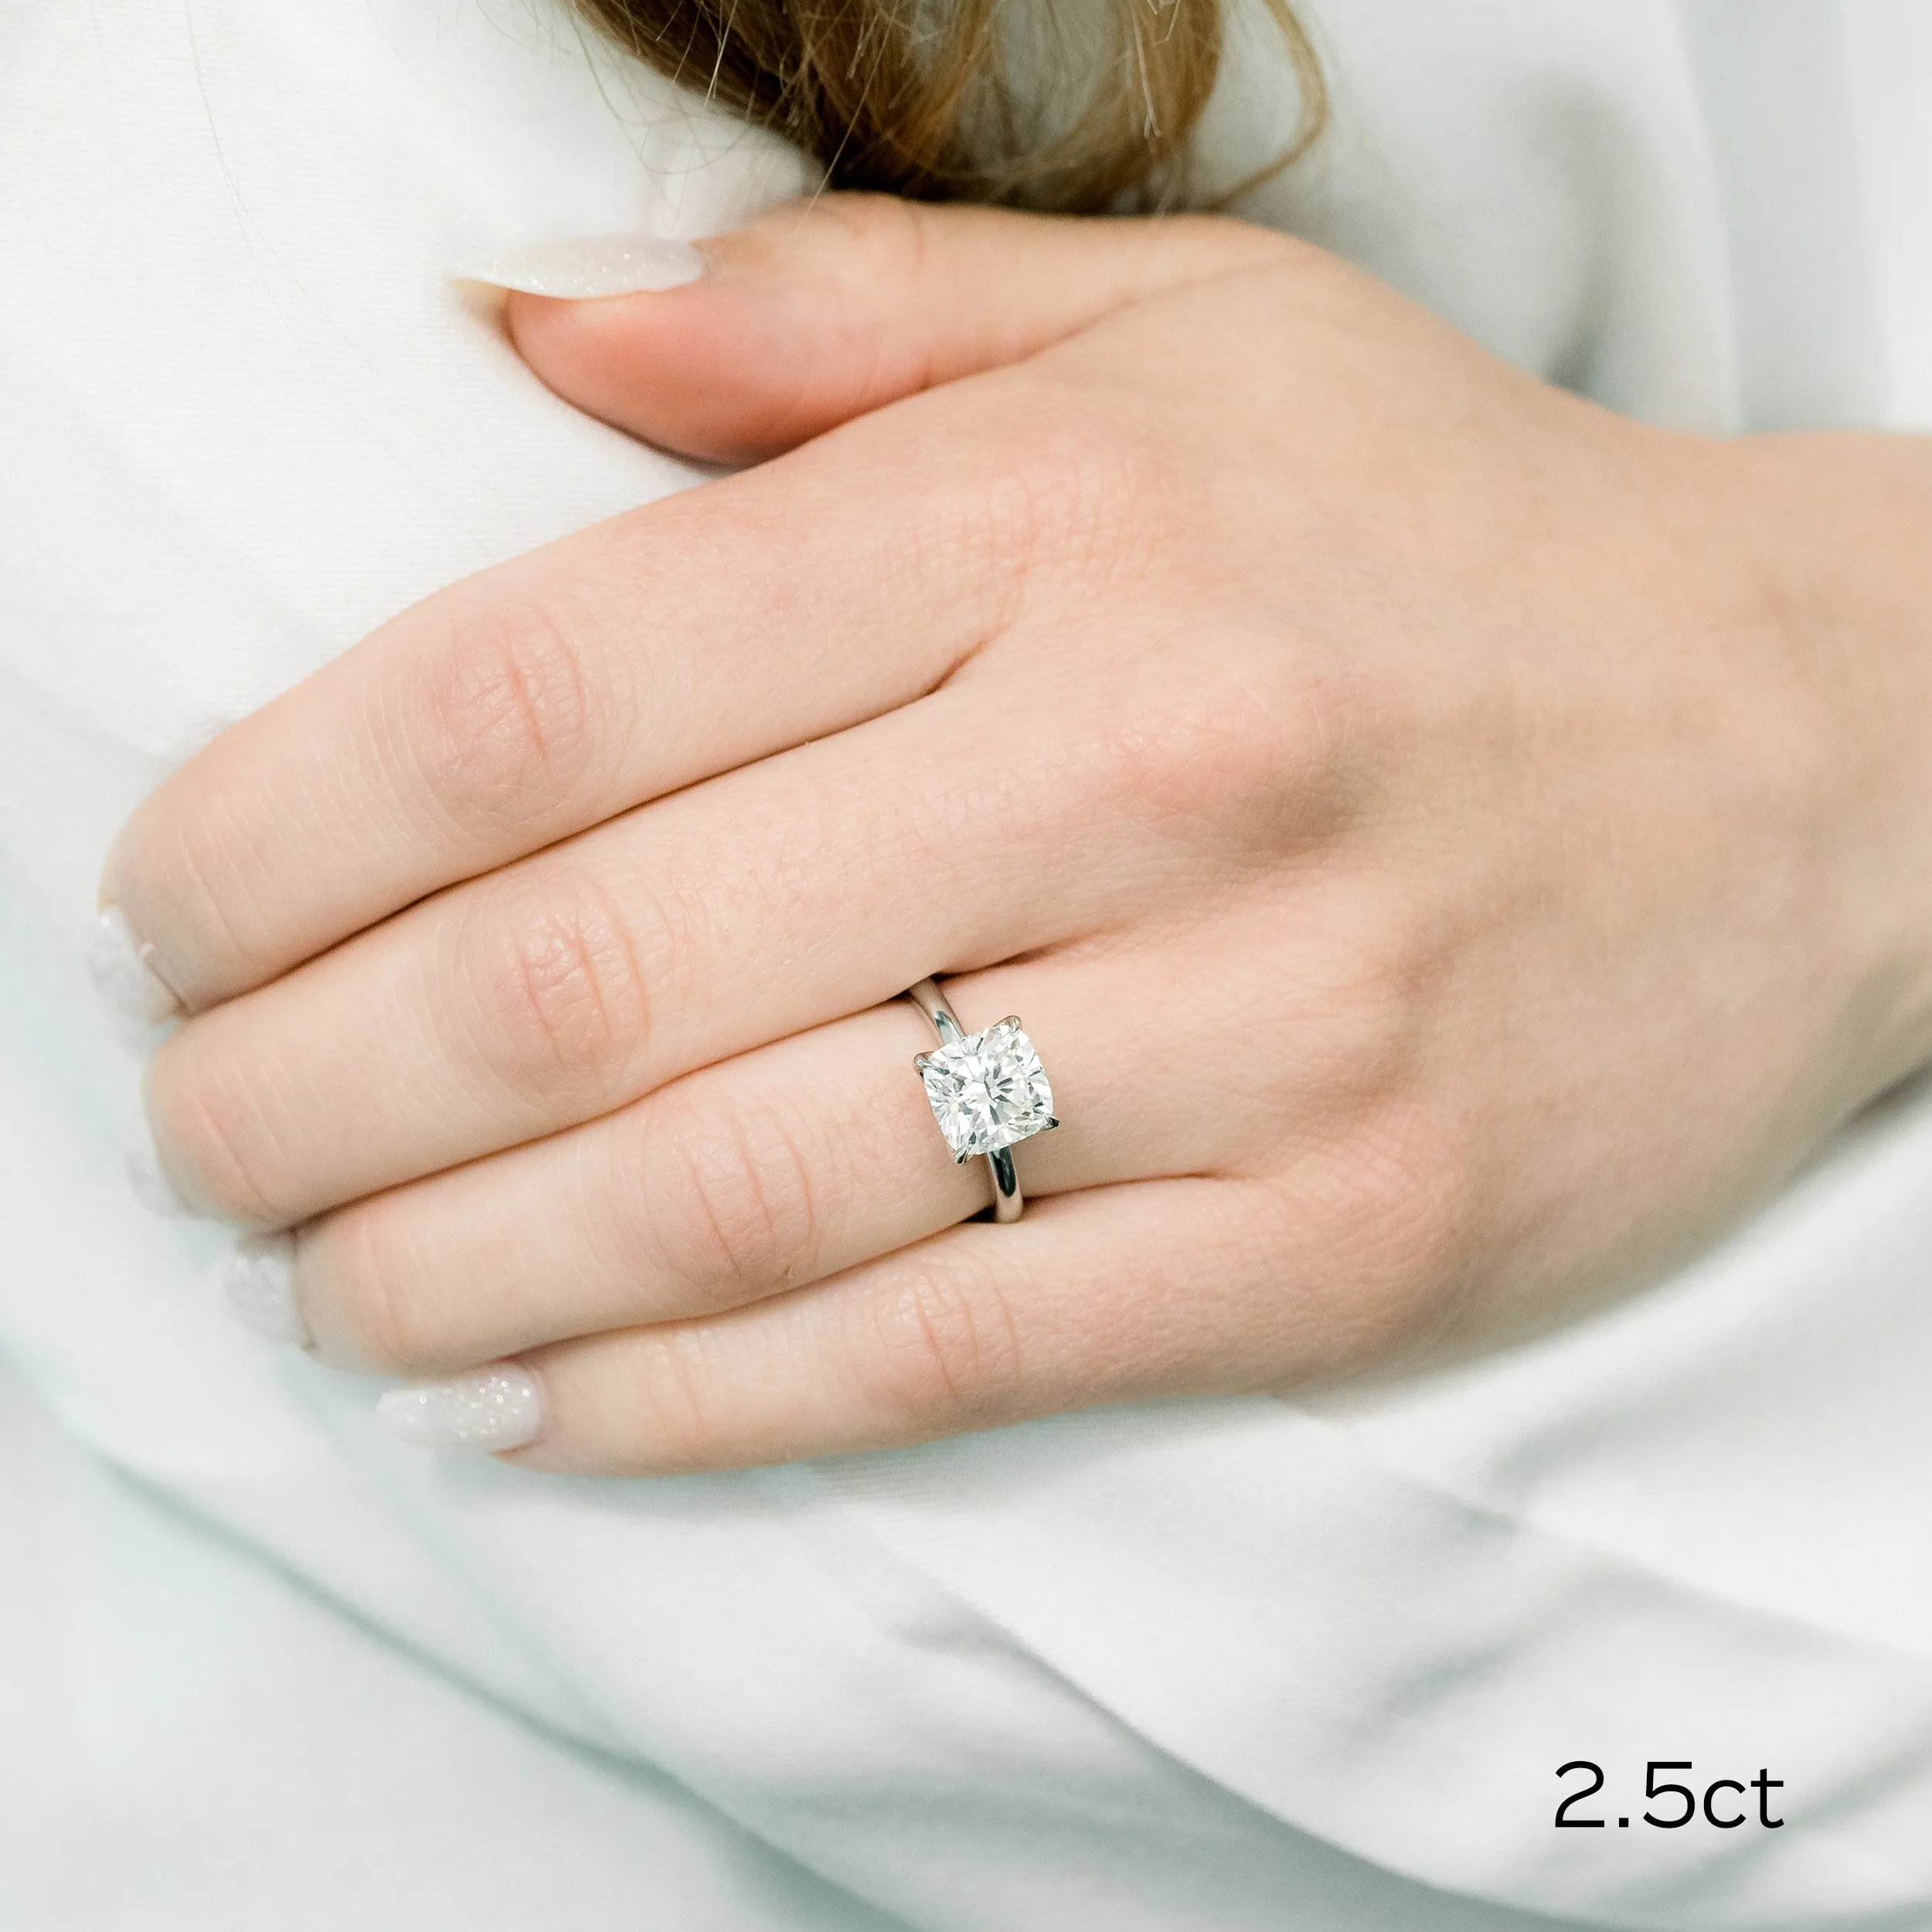 platinum 2.5ct cushion cut lab diamond tulip style solitaire engagement ring ada diamonds design ad 368 on model